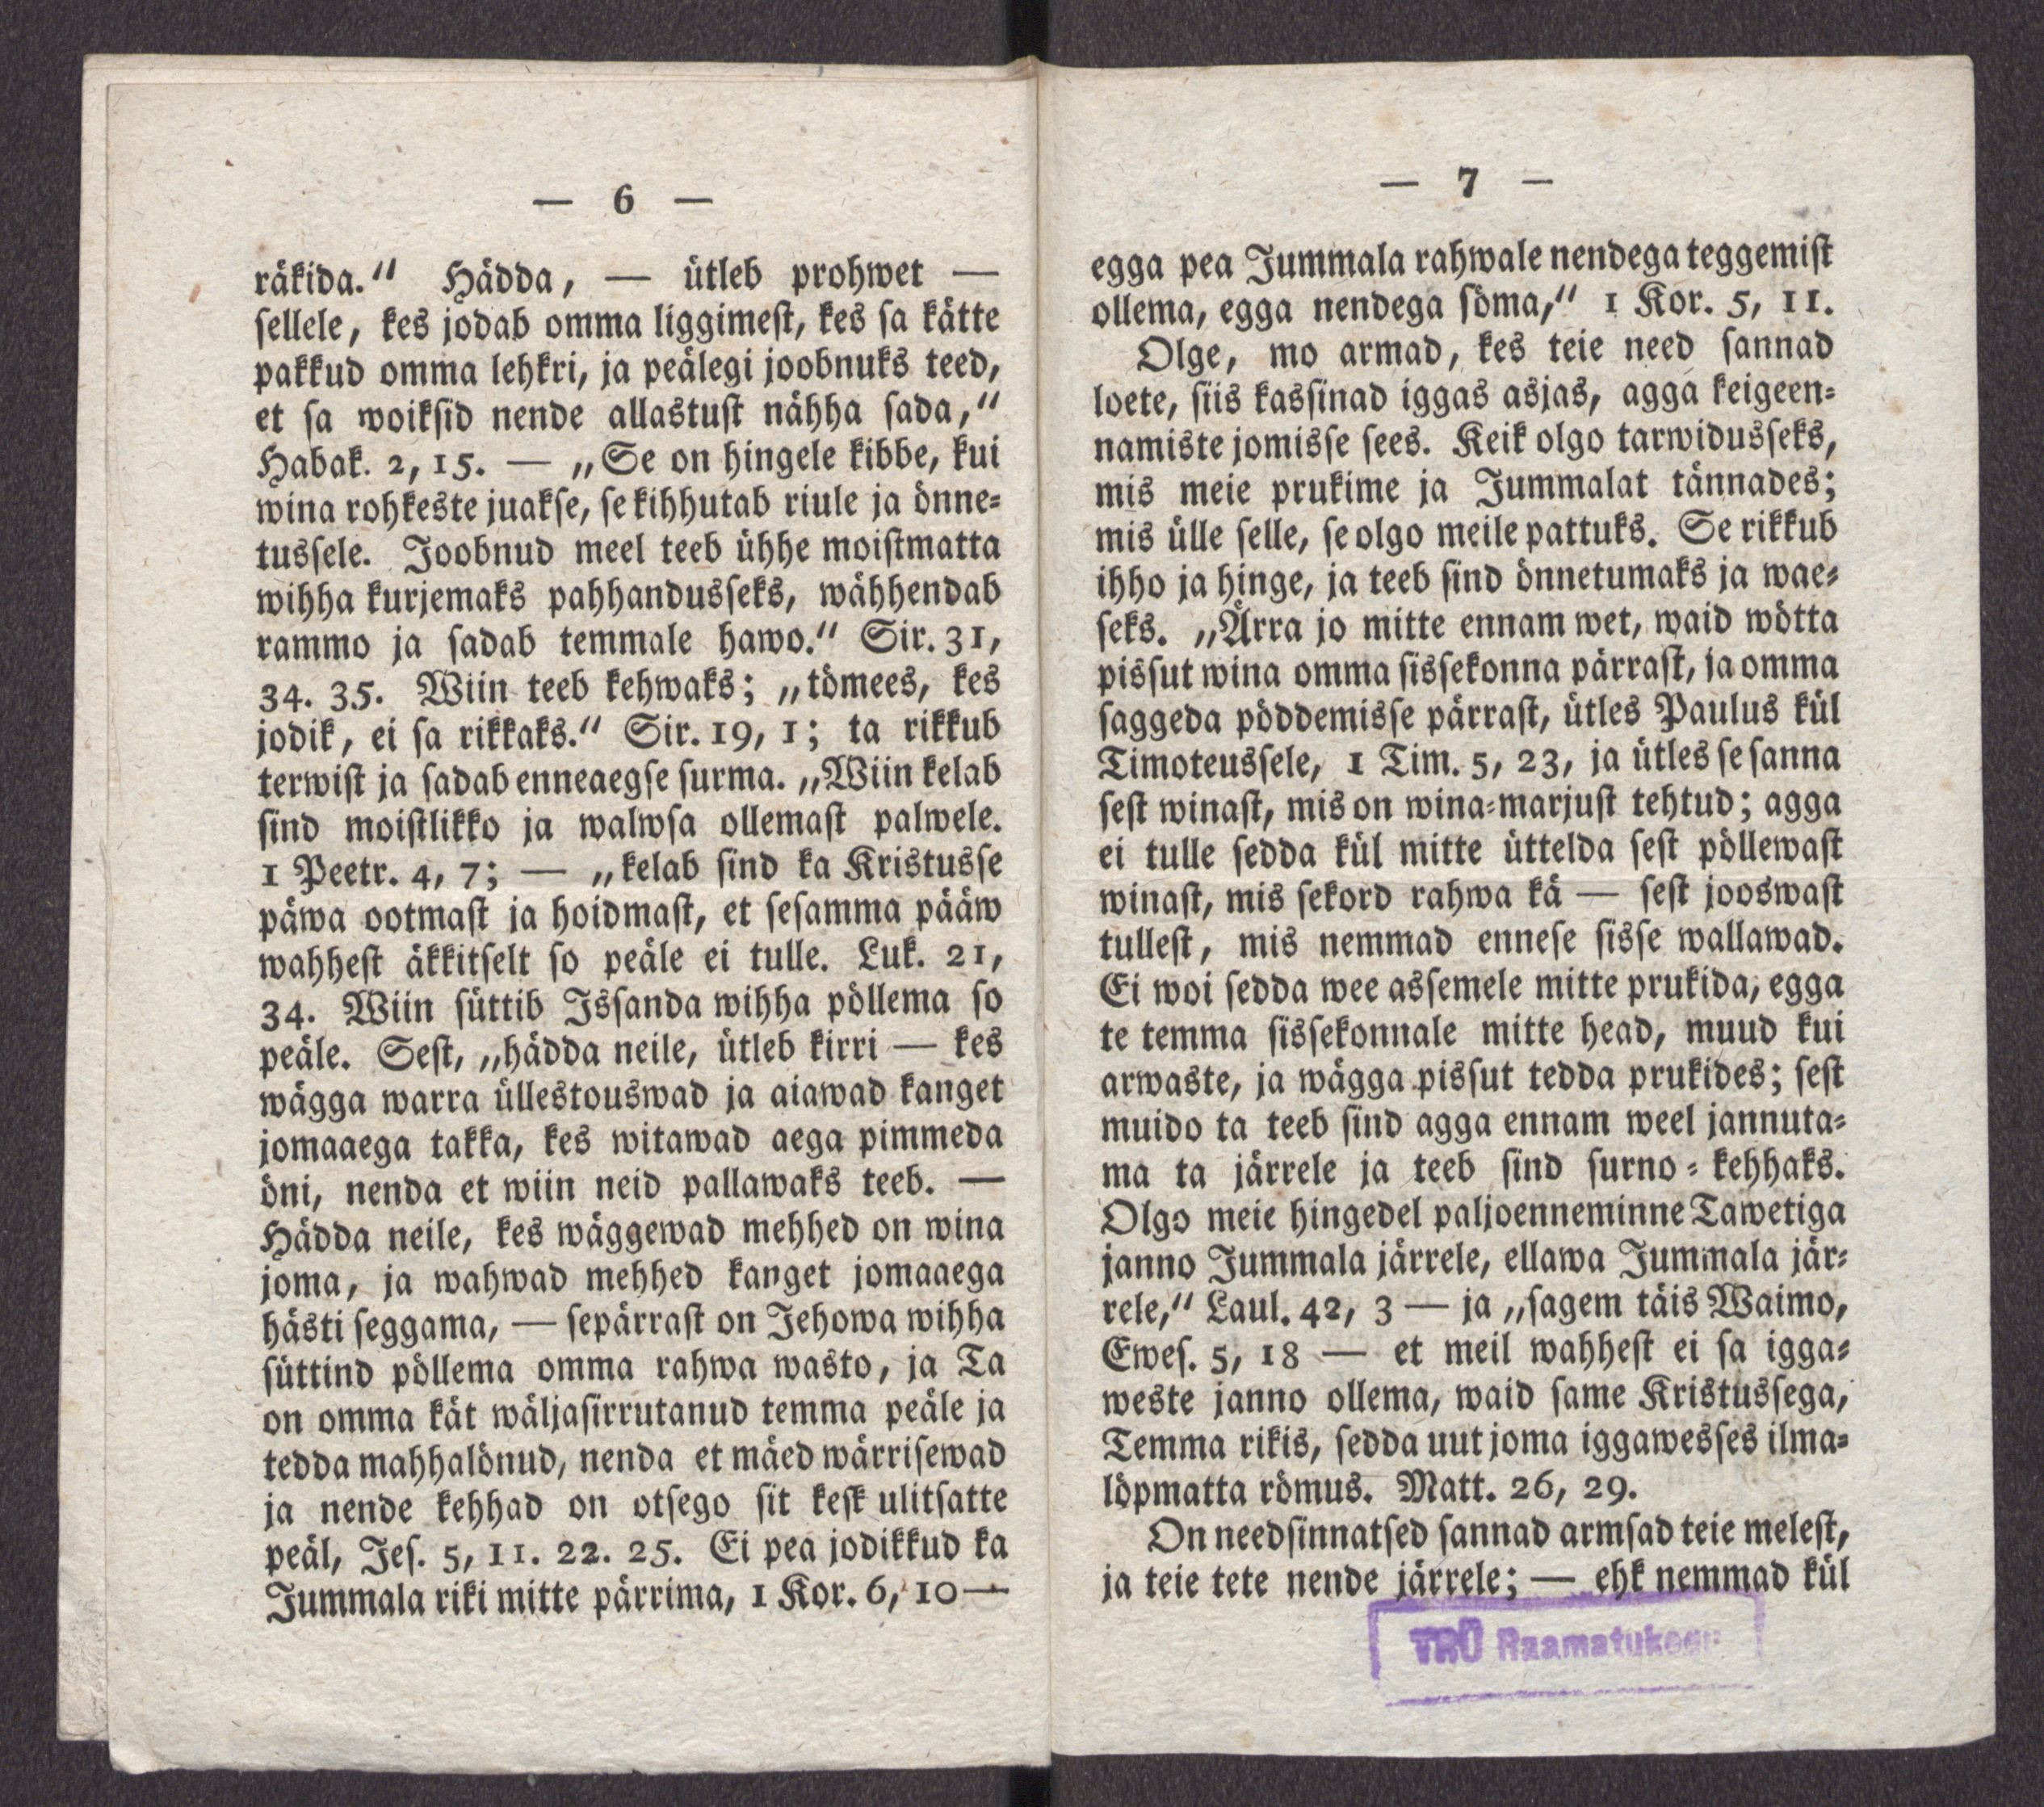 Armastusse sanna liajomisse wasto (1838) | 4. (6-7) Main body of text